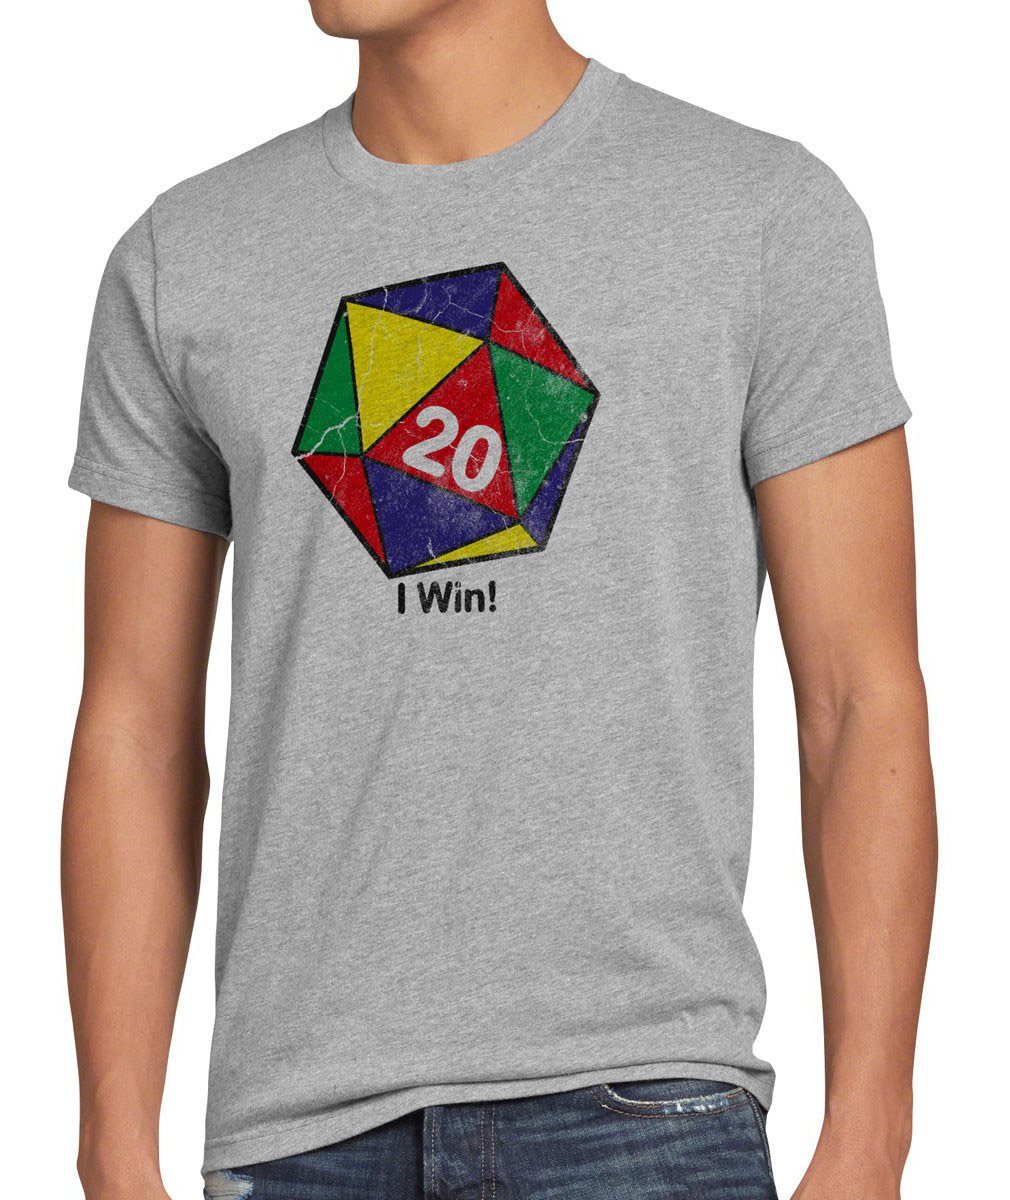 style3 Print-Shirt Herren mathematik meliert cooper W20 big theory T-Shirt grau bang Zauberwürfel Sheldon the